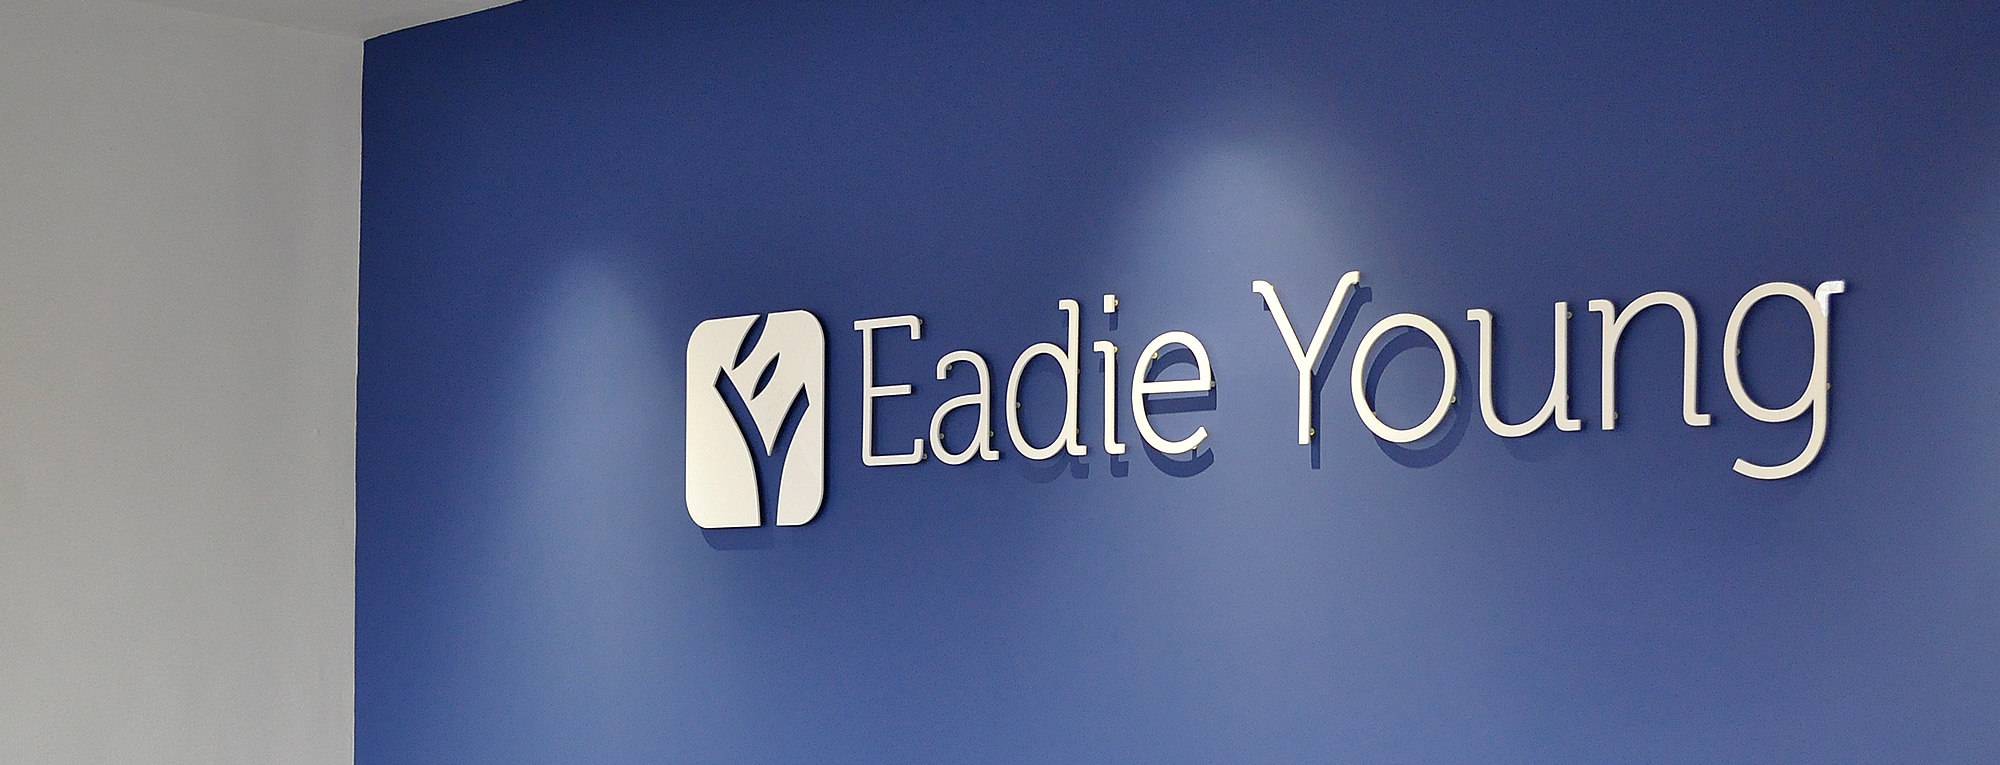 Eadie Young Branding